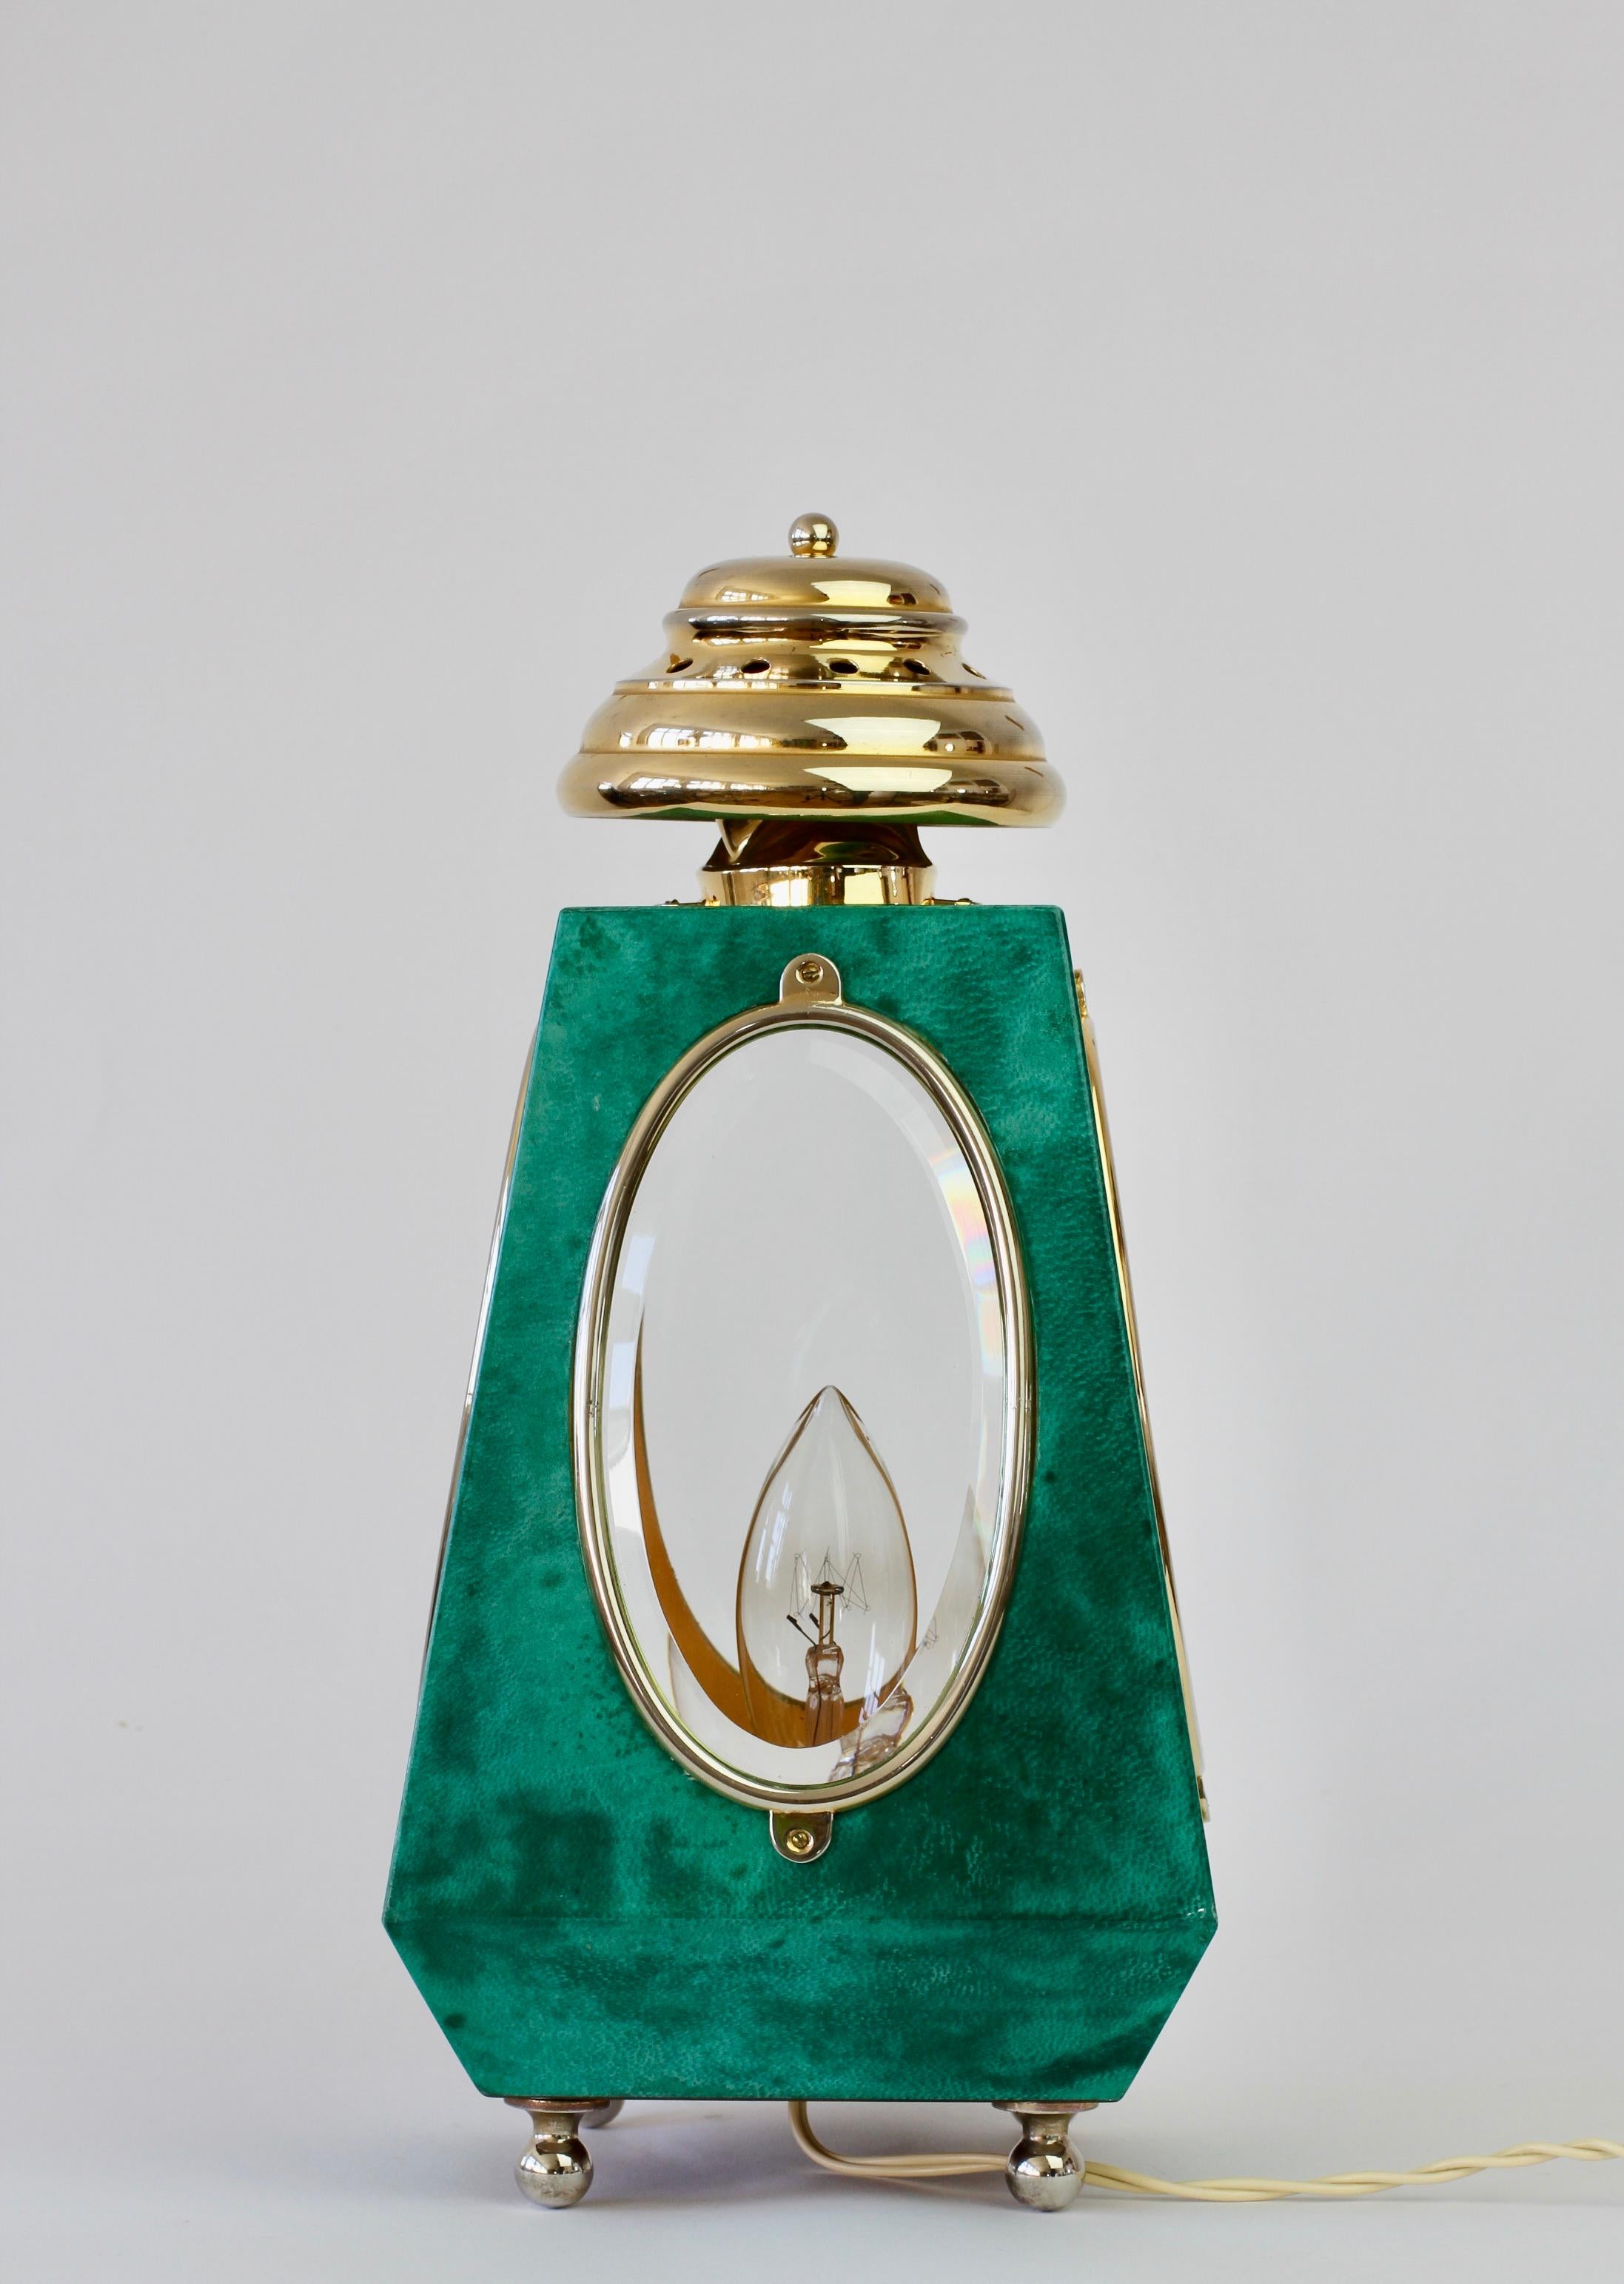 Aldo Tura 1960s Midcentury Table Lamp / Lantern in Green Italian Goatskin 1